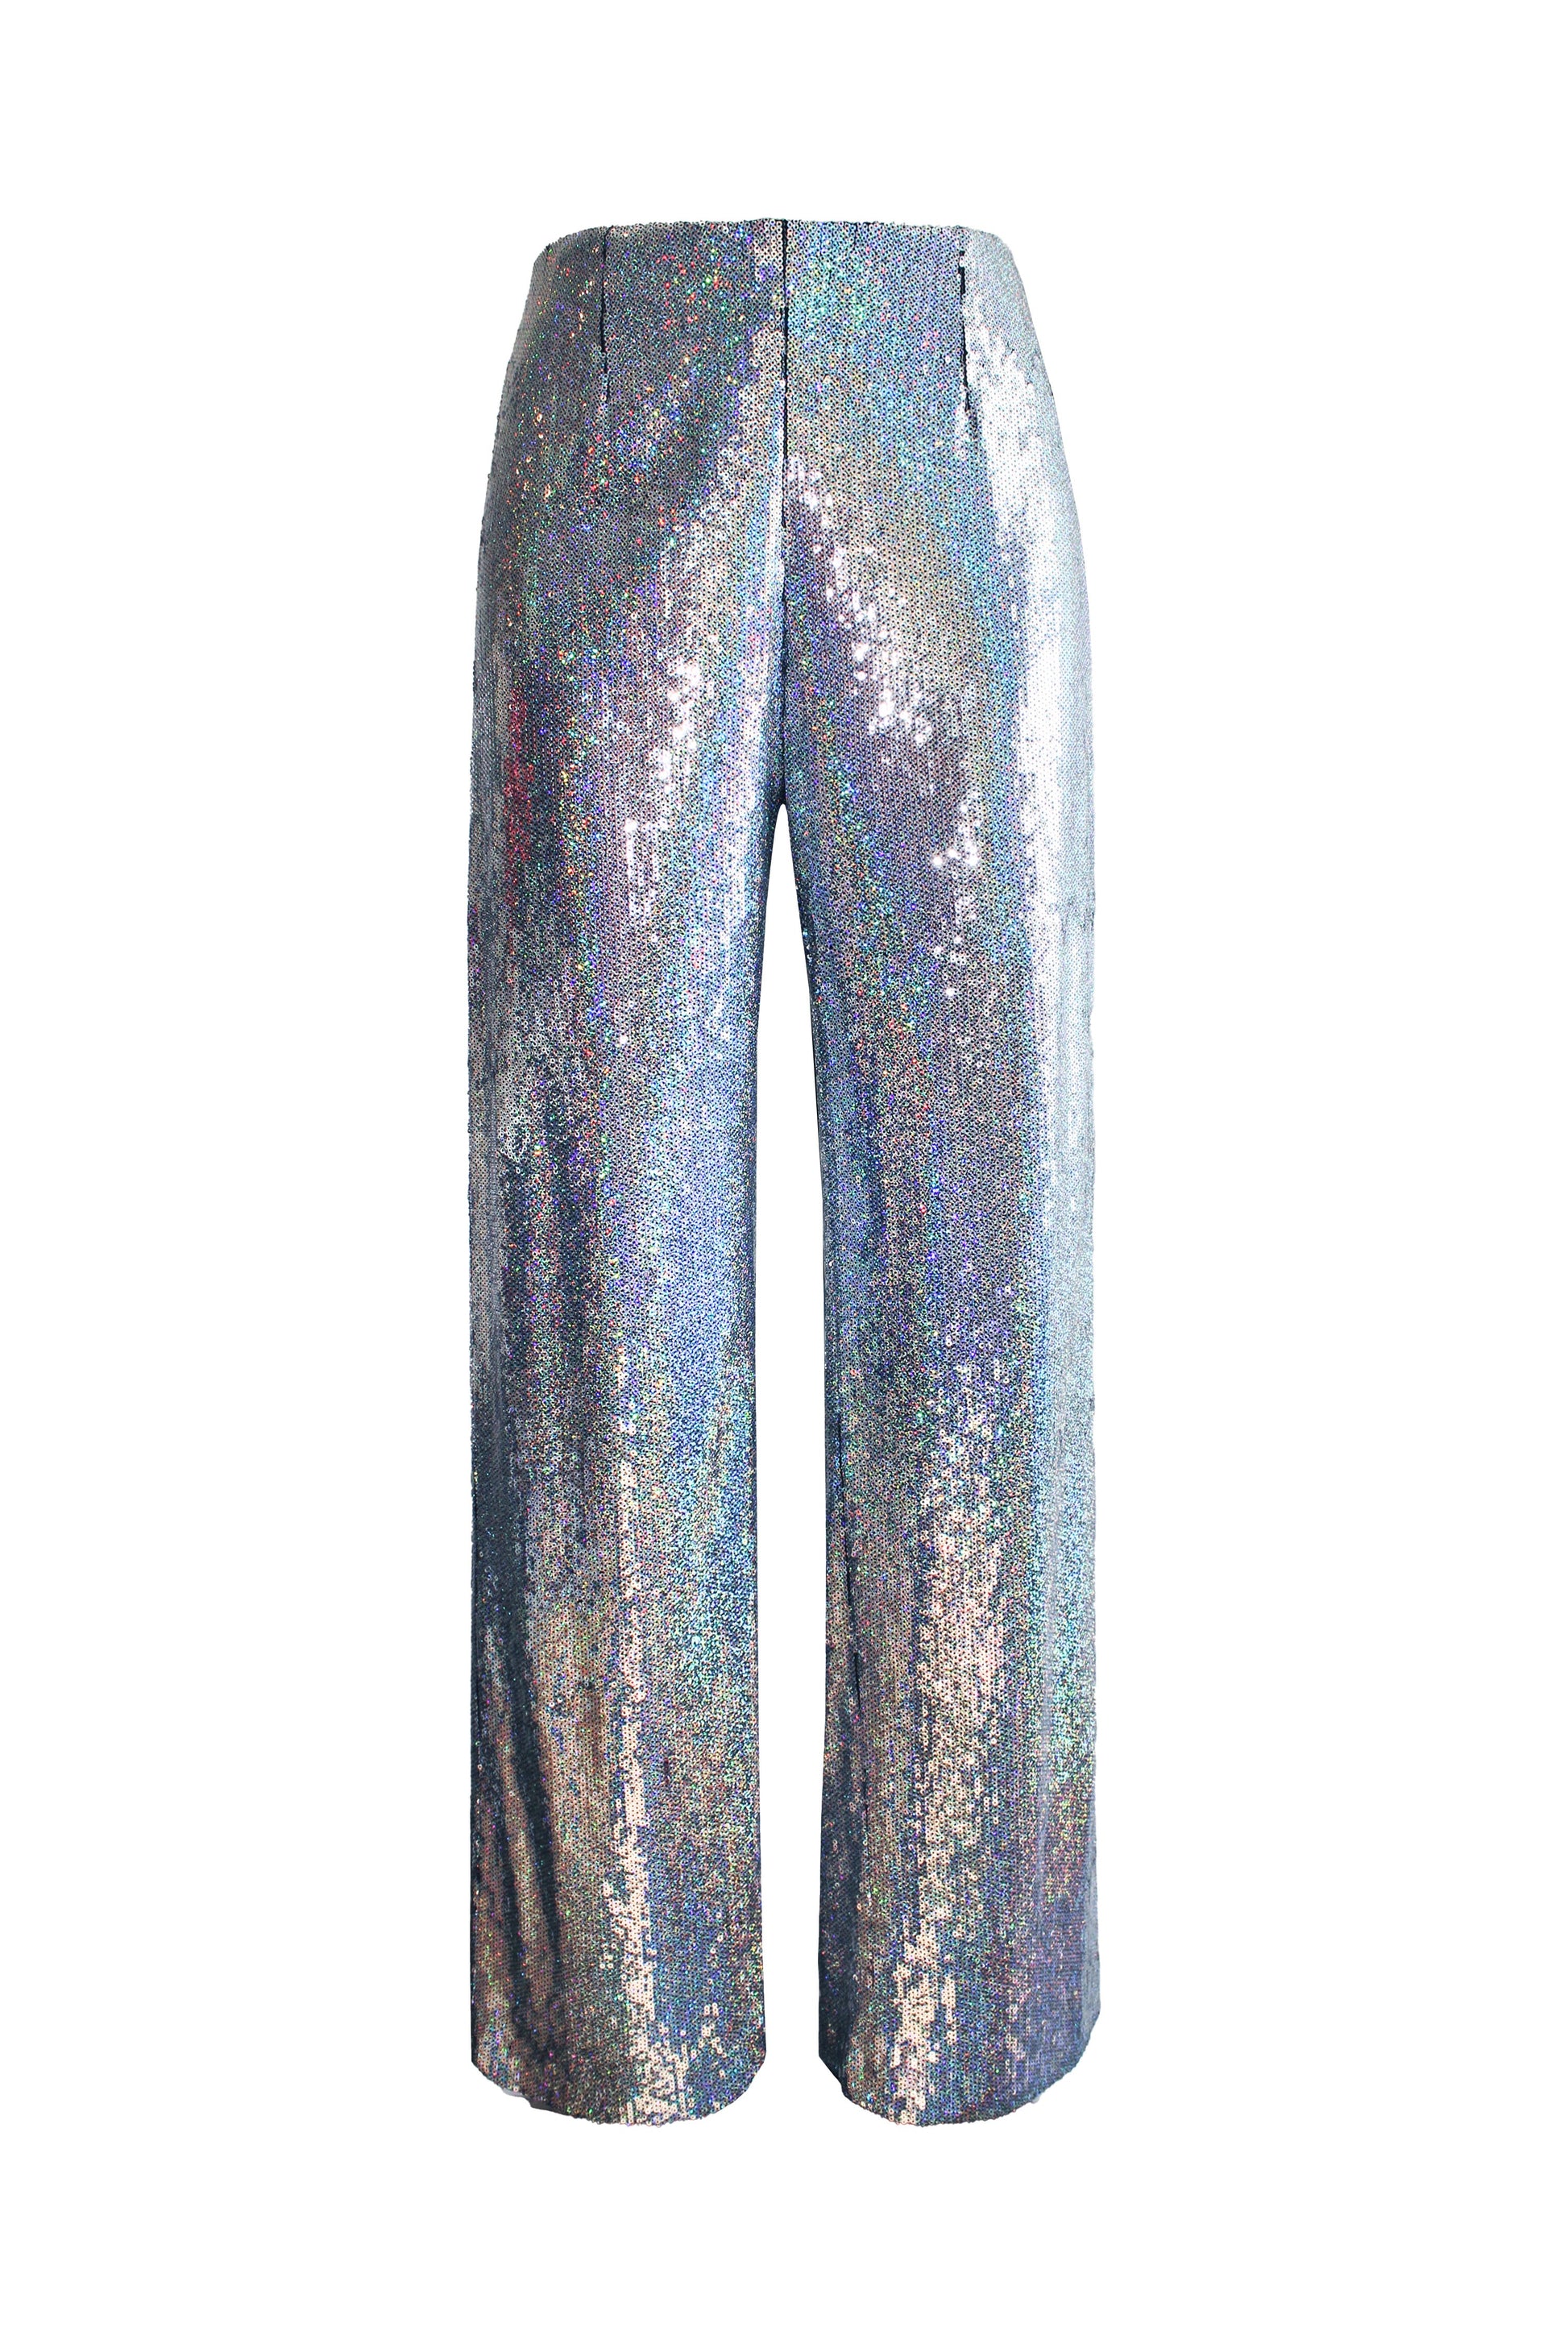 Silver sequined straight-leg trouser pants for women